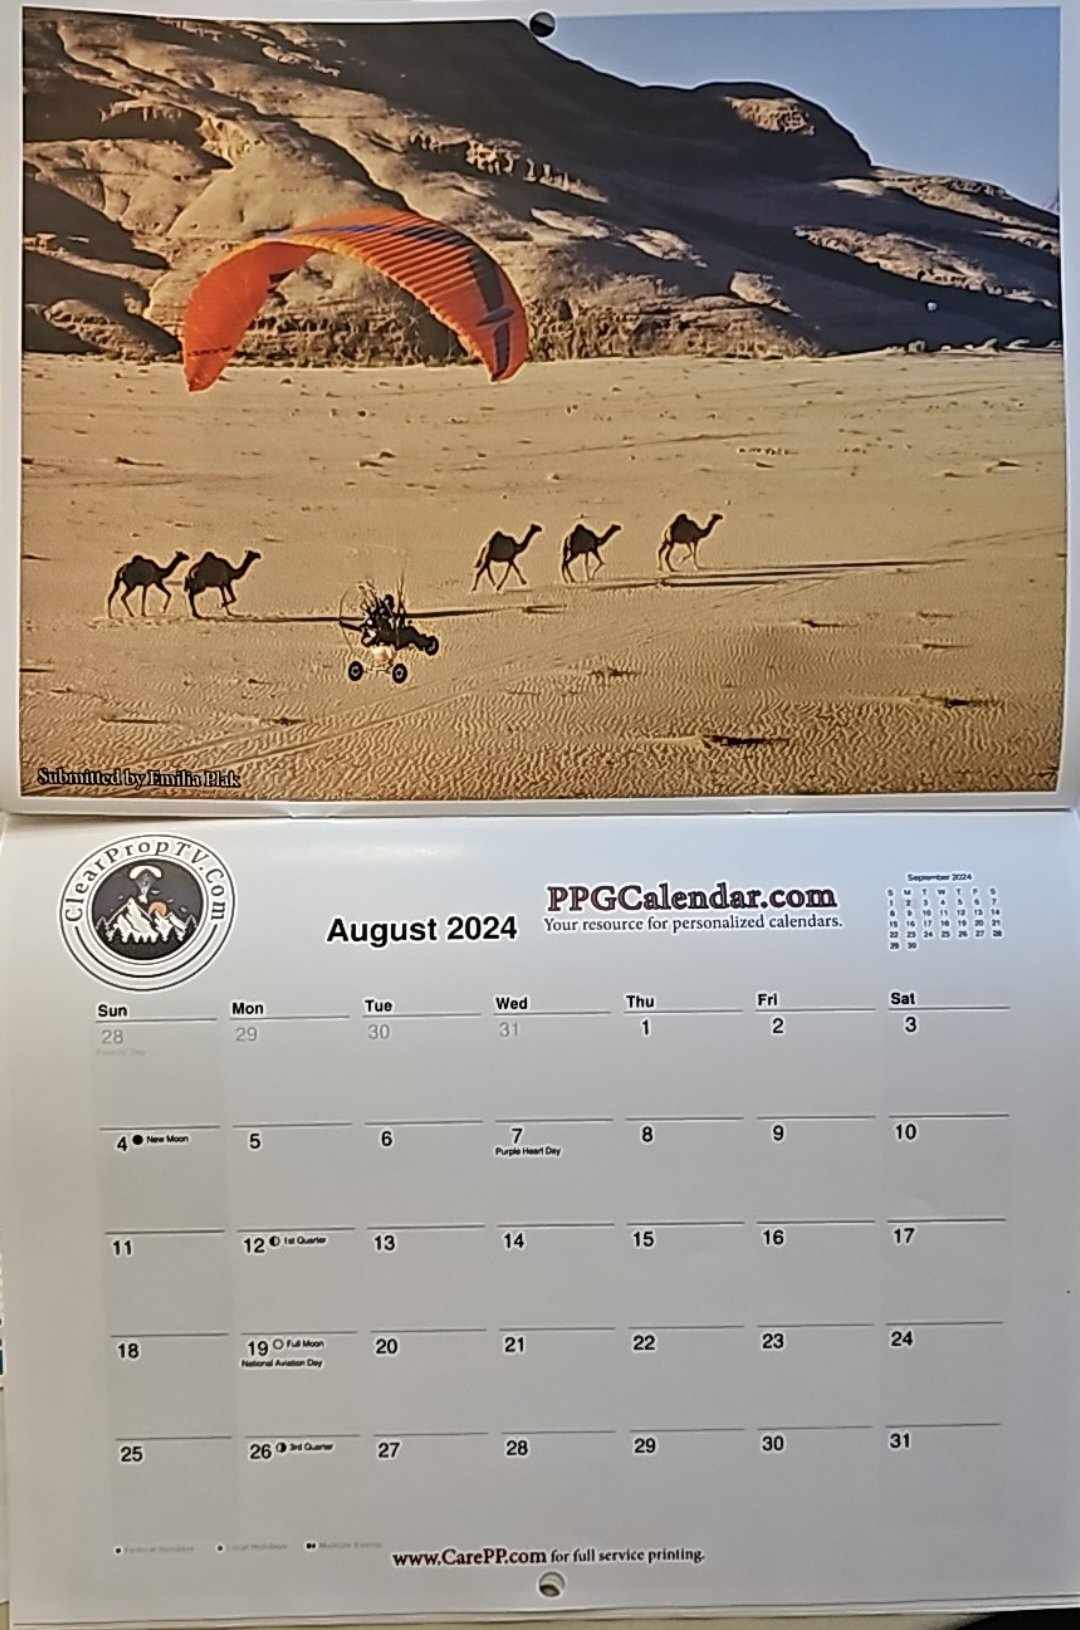 Personal Paramotor Calendar